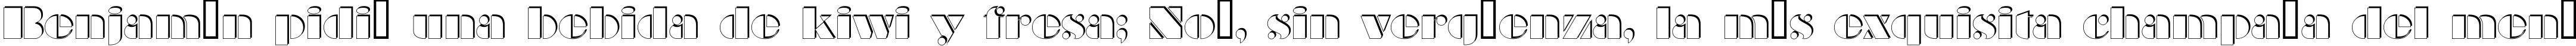 Пример написания шрифтом a_BraggaOtlSh текста на испанском